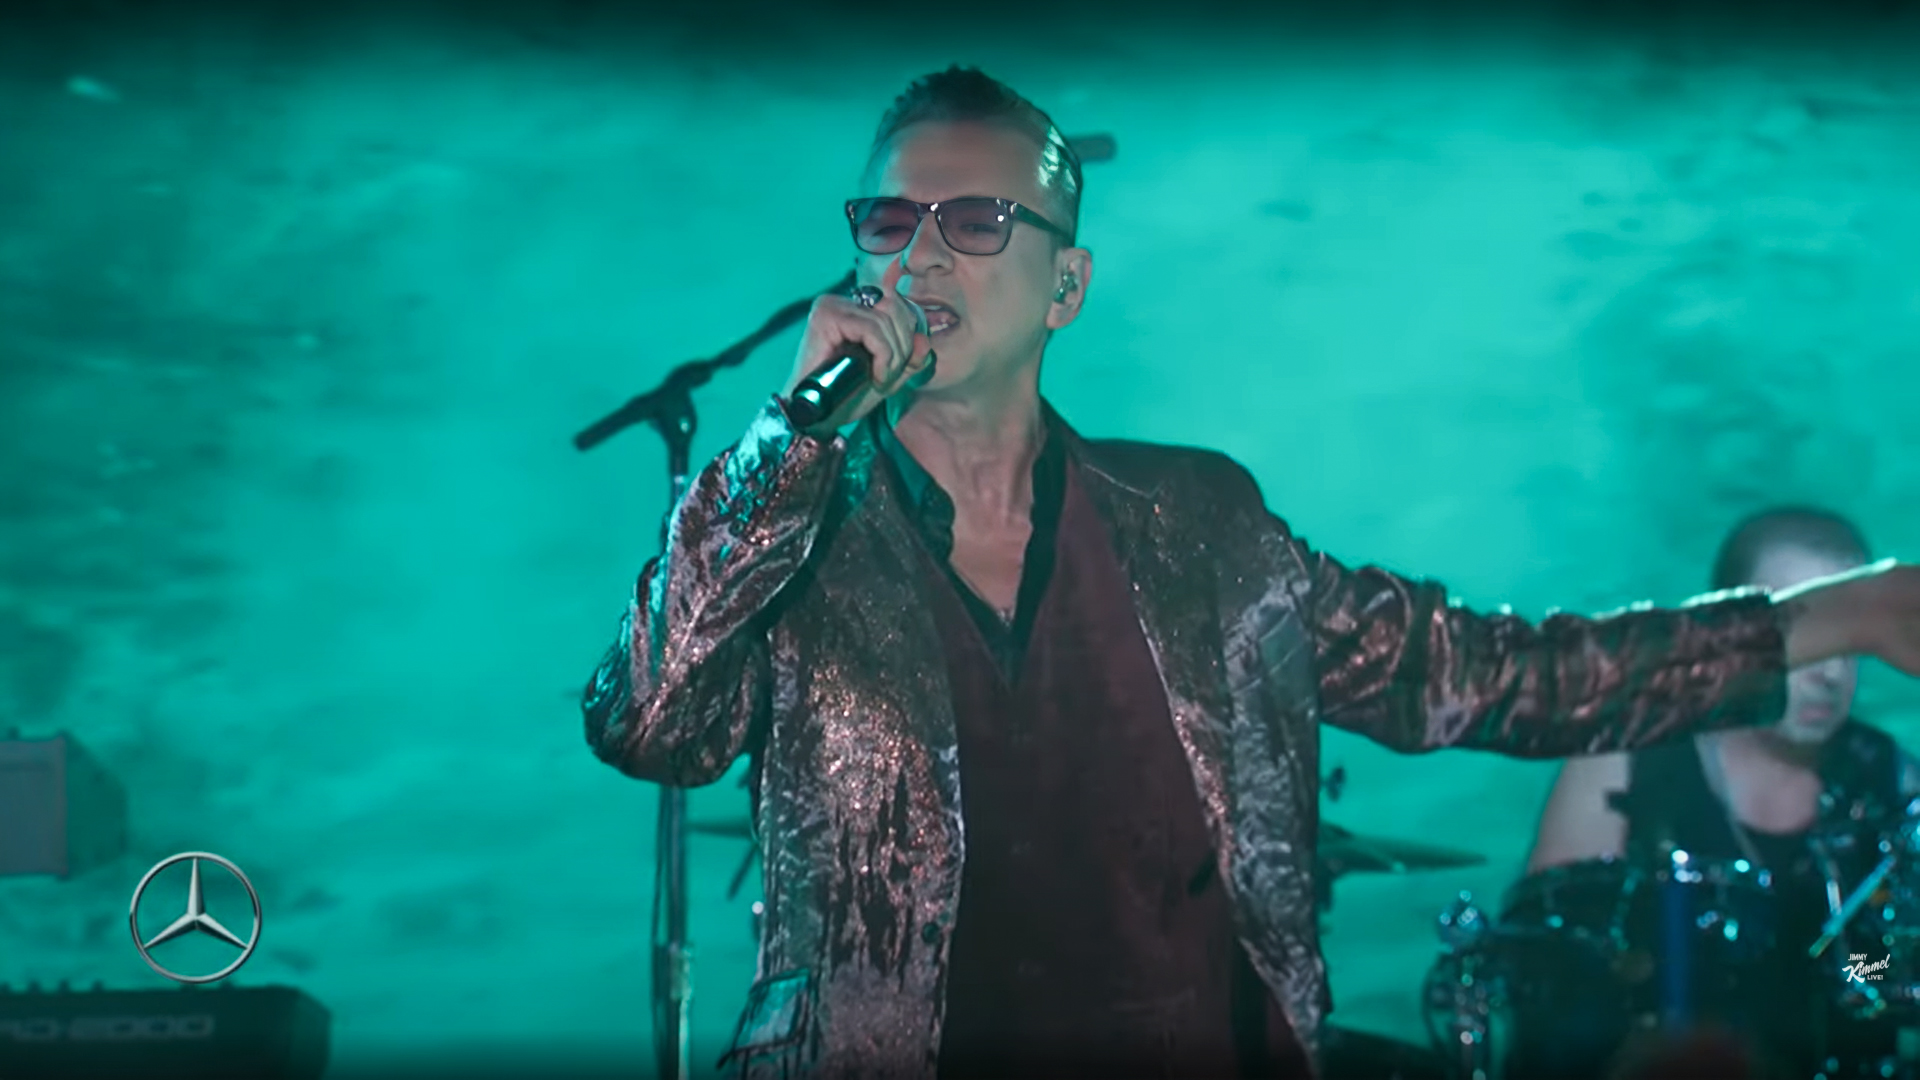 New Depeche Mode album Memento Mori and world tour announced